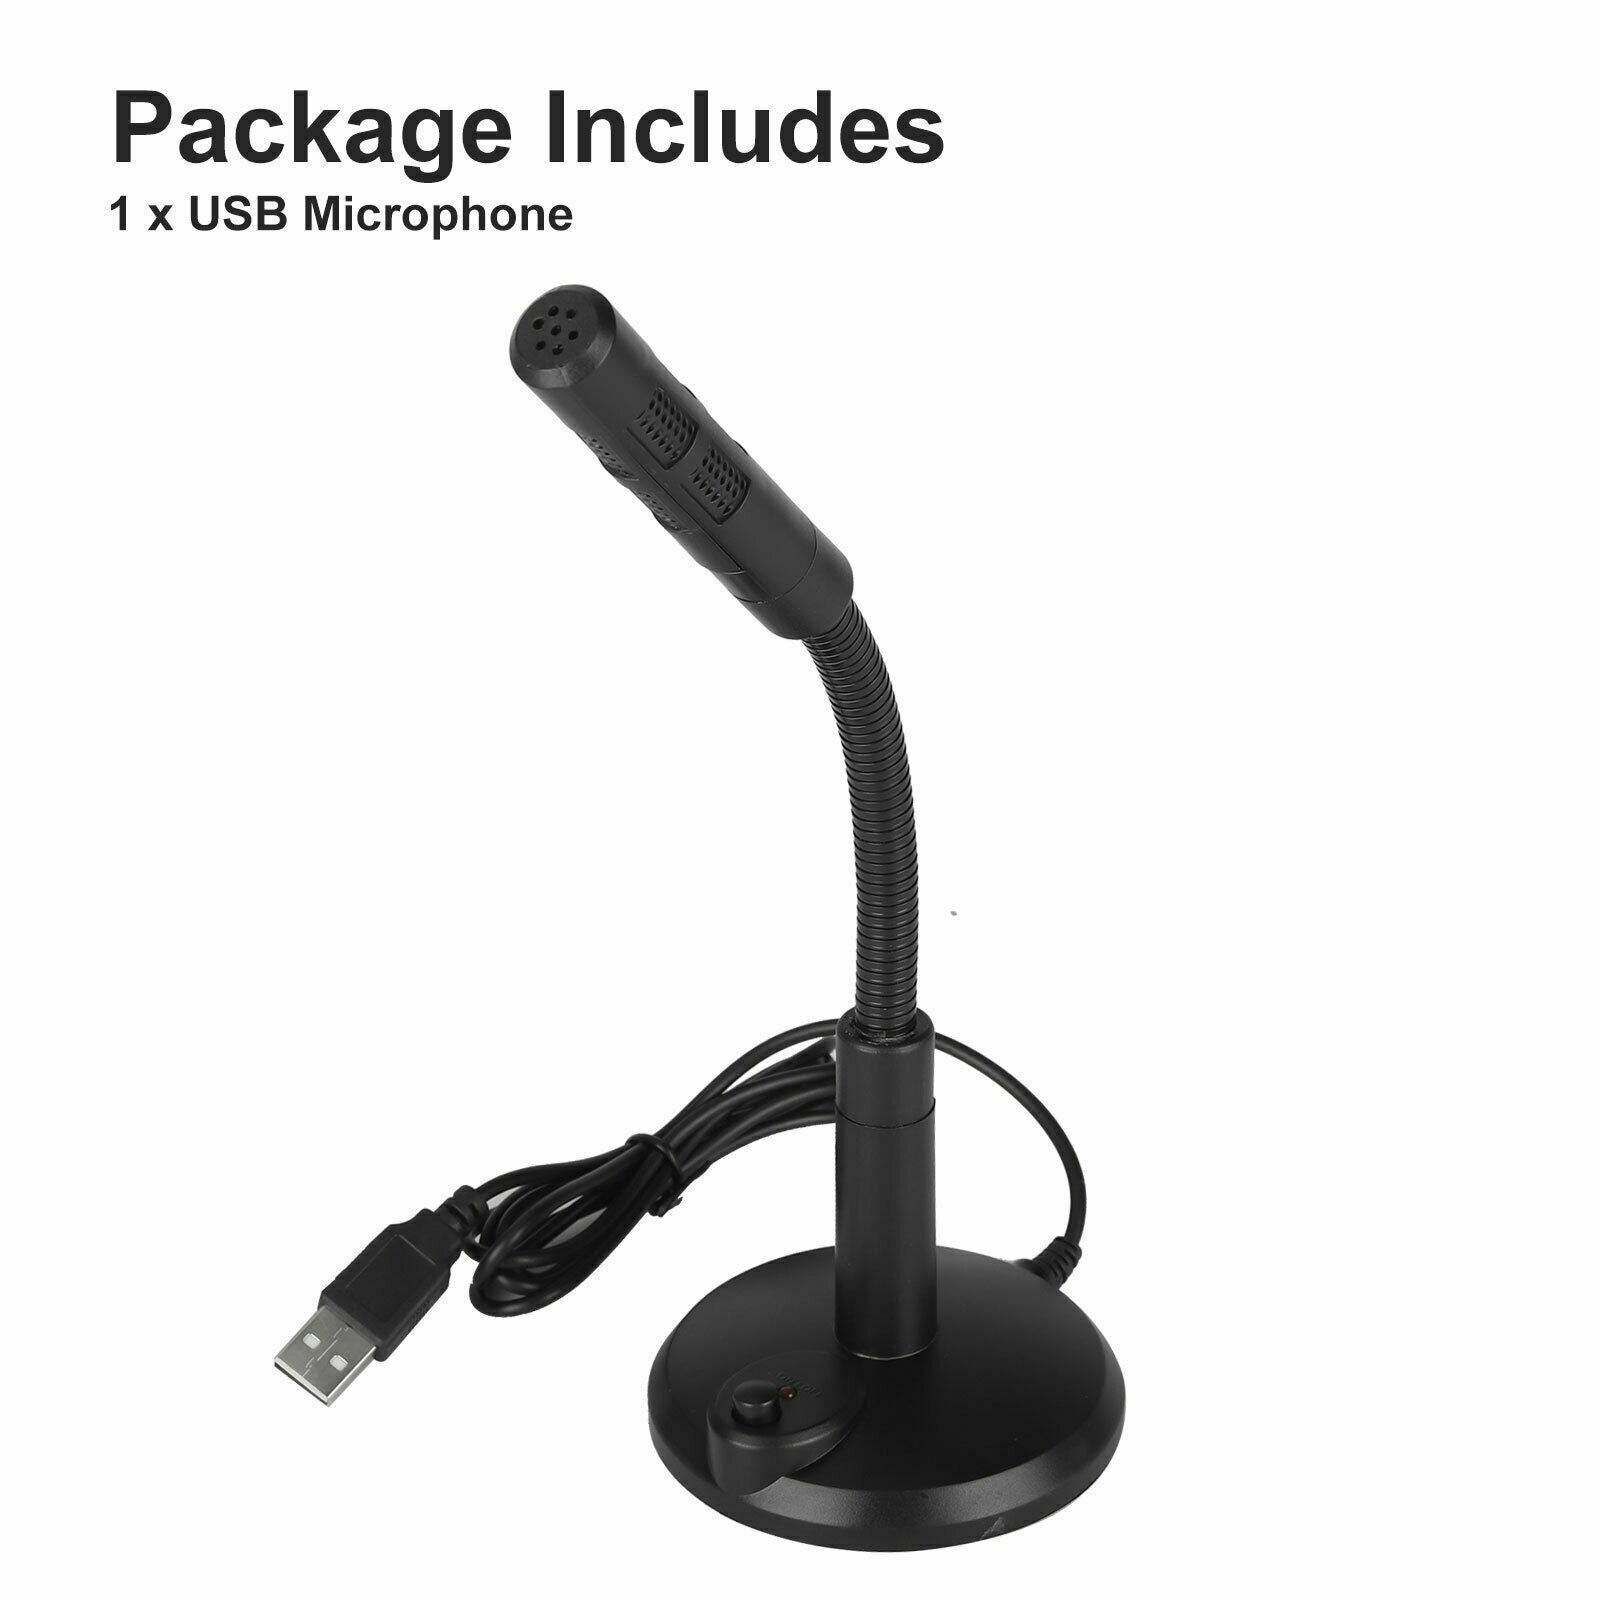 USB Computer Microphone Noise Canceling Voice Recording Mic for Desktop Laptop